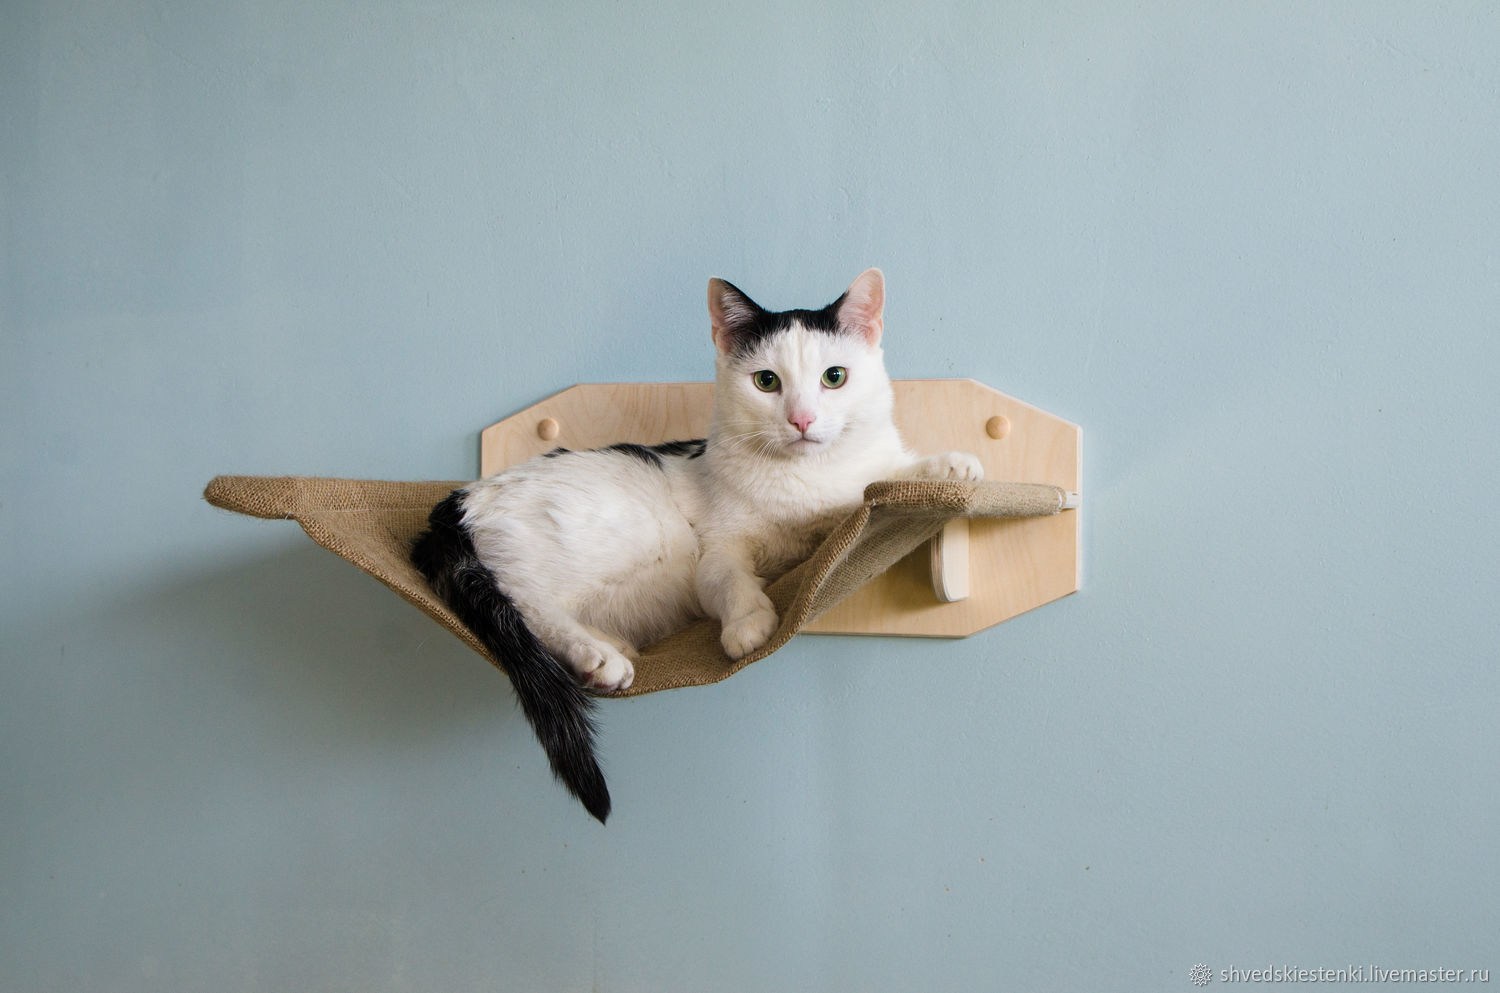 гамак для кошек на стул